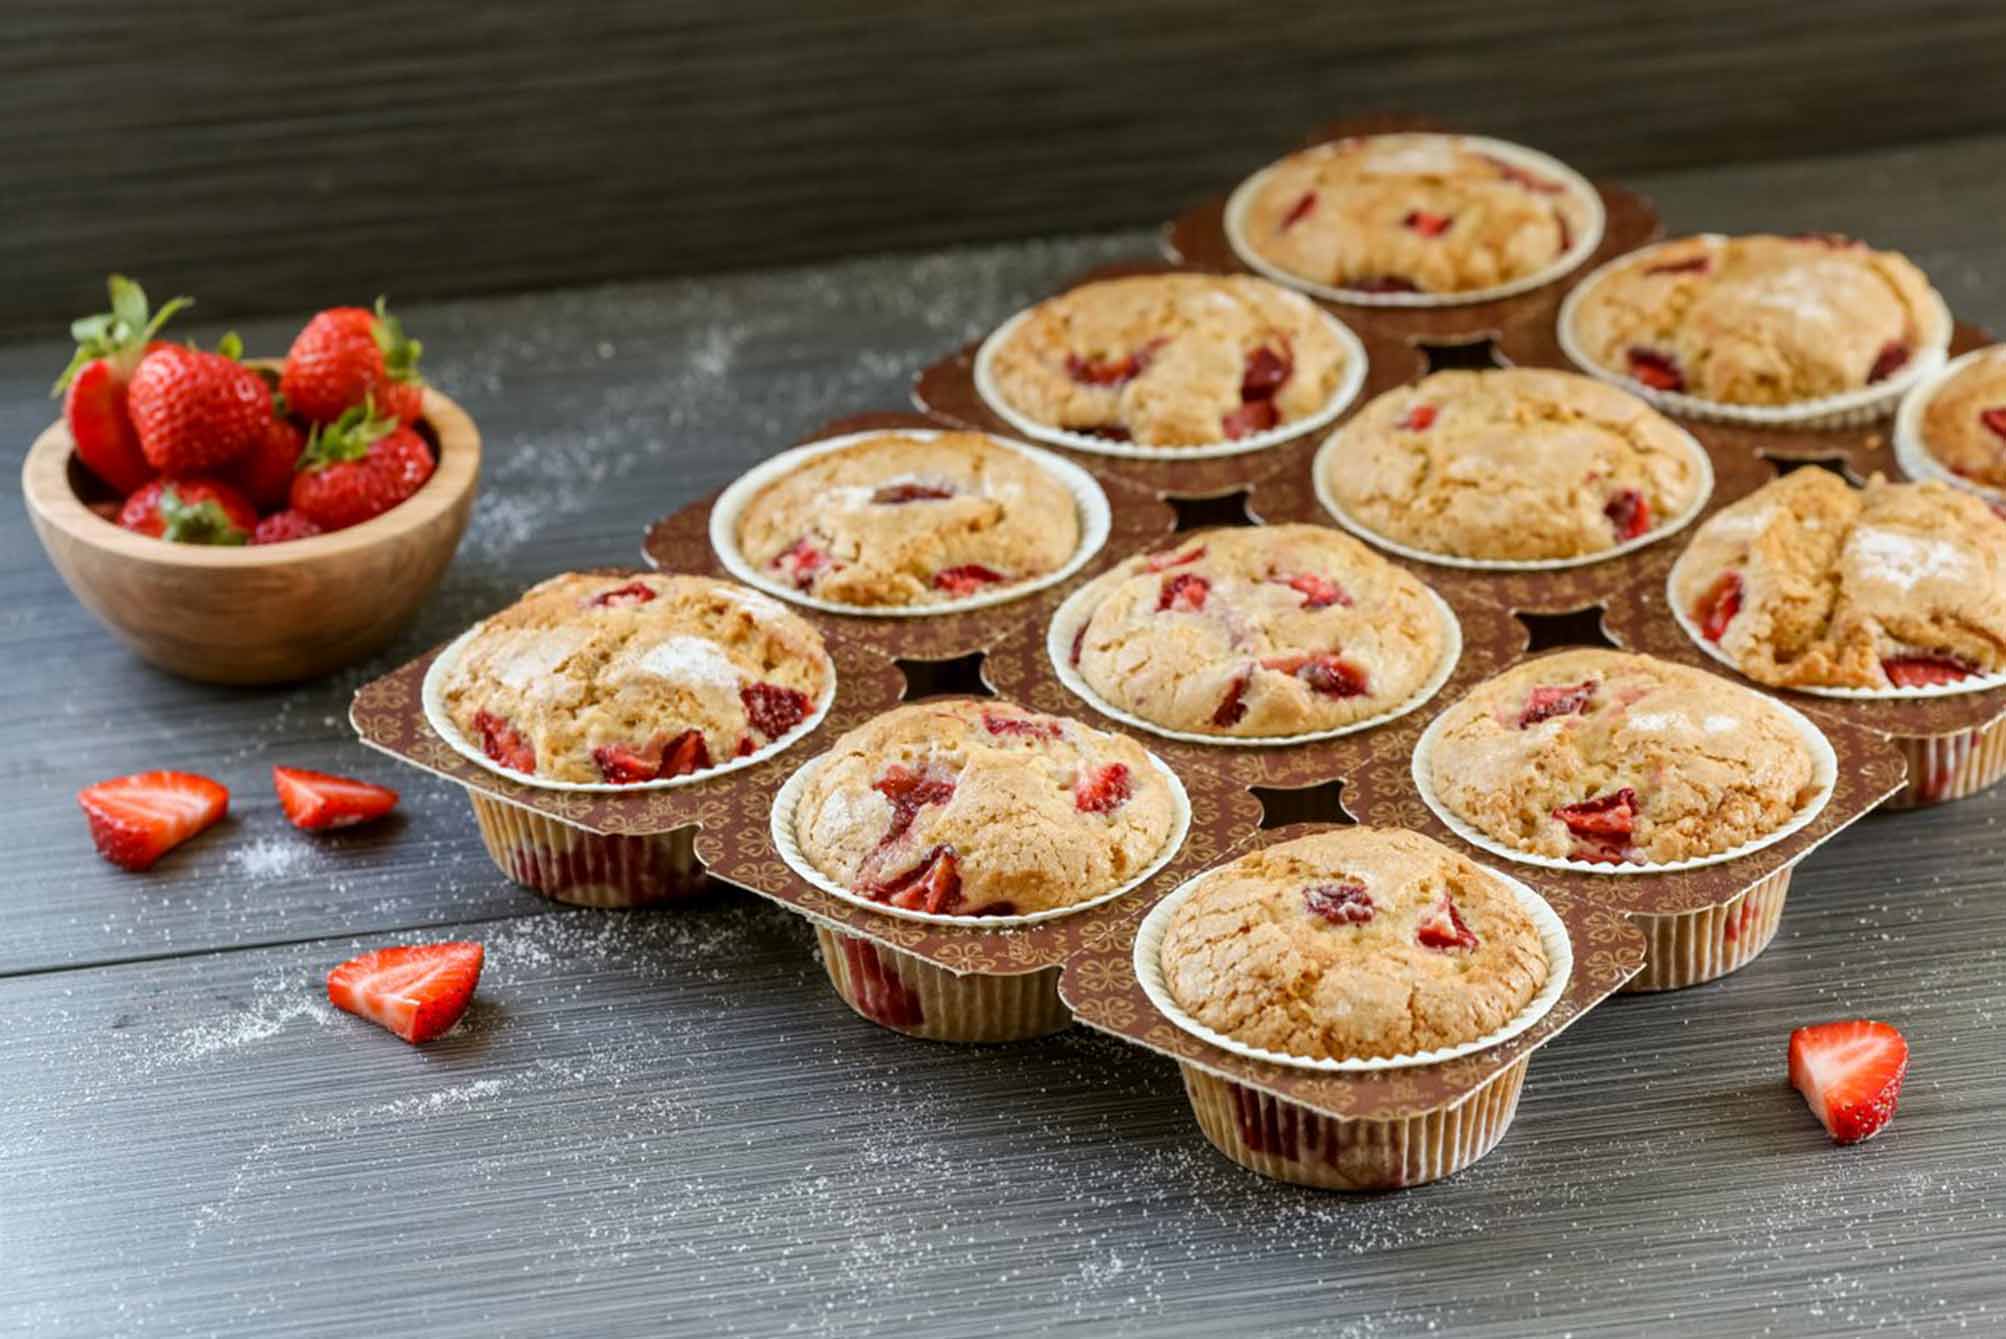 Novacart muffin tray and strawberry muffins